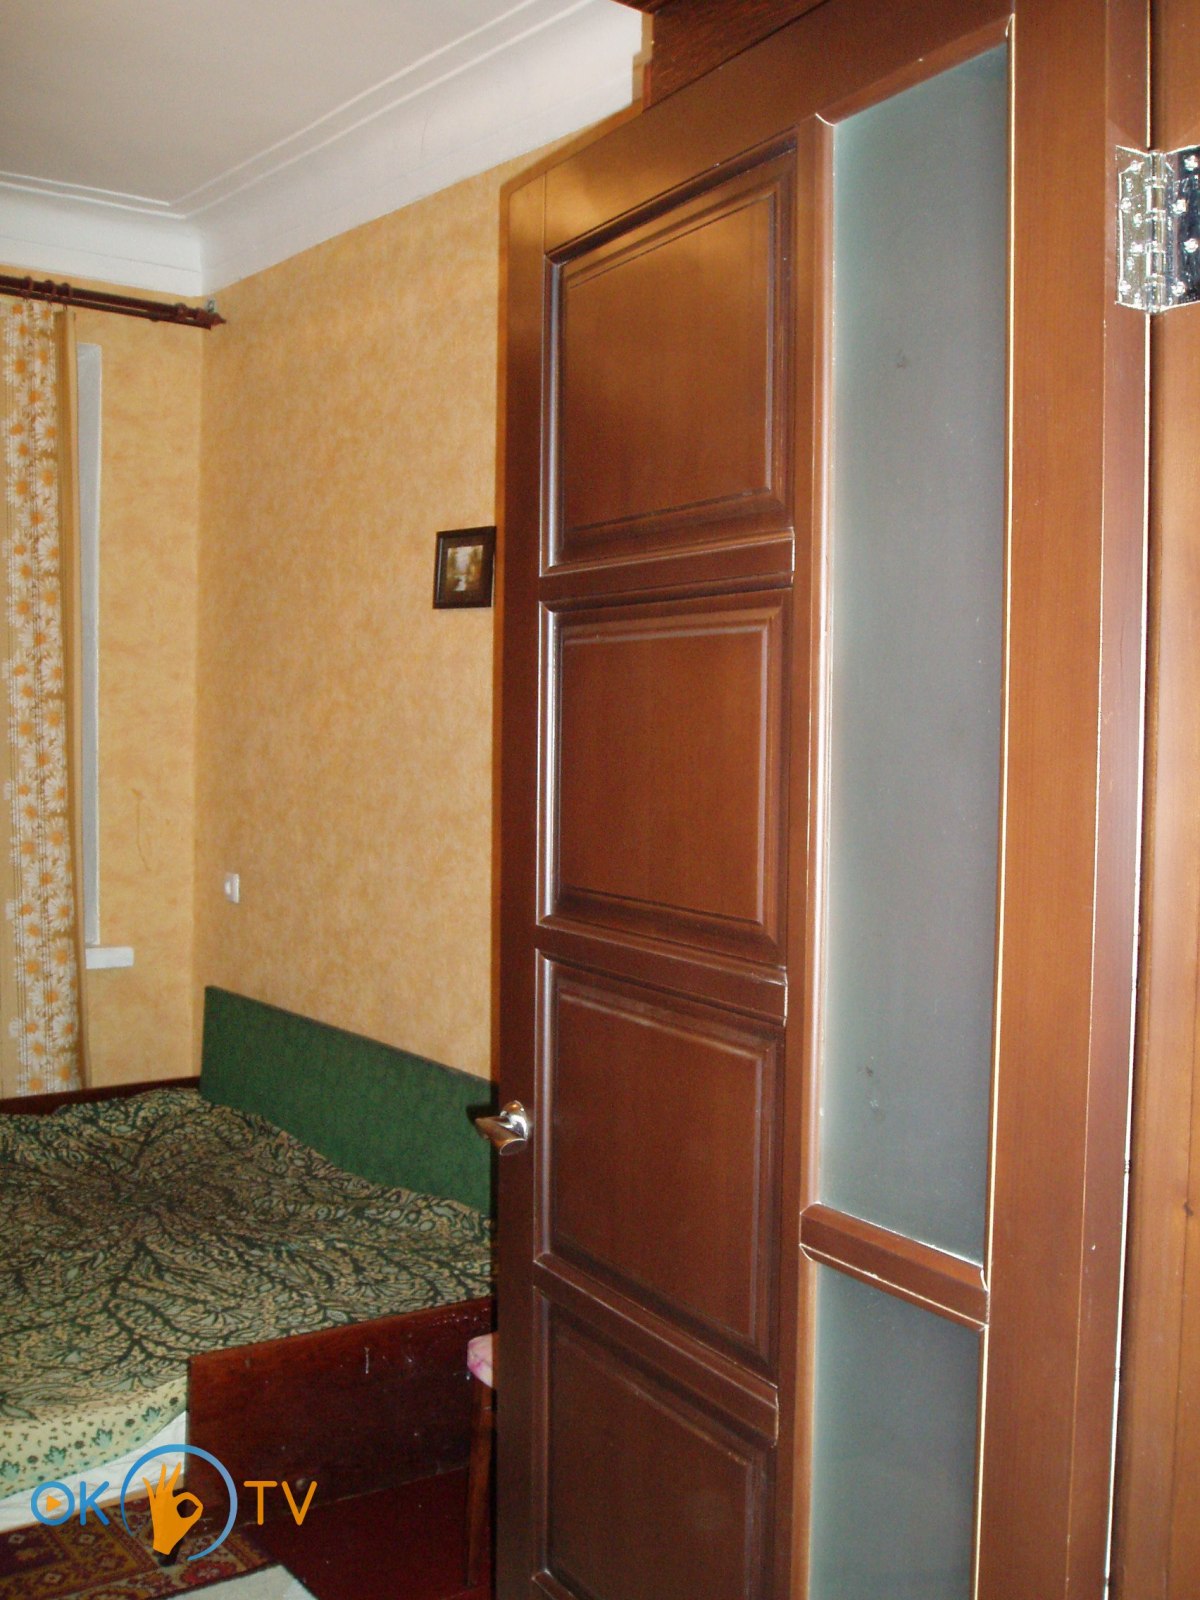 Двухкомнатная квартира в Запорожье фото 2